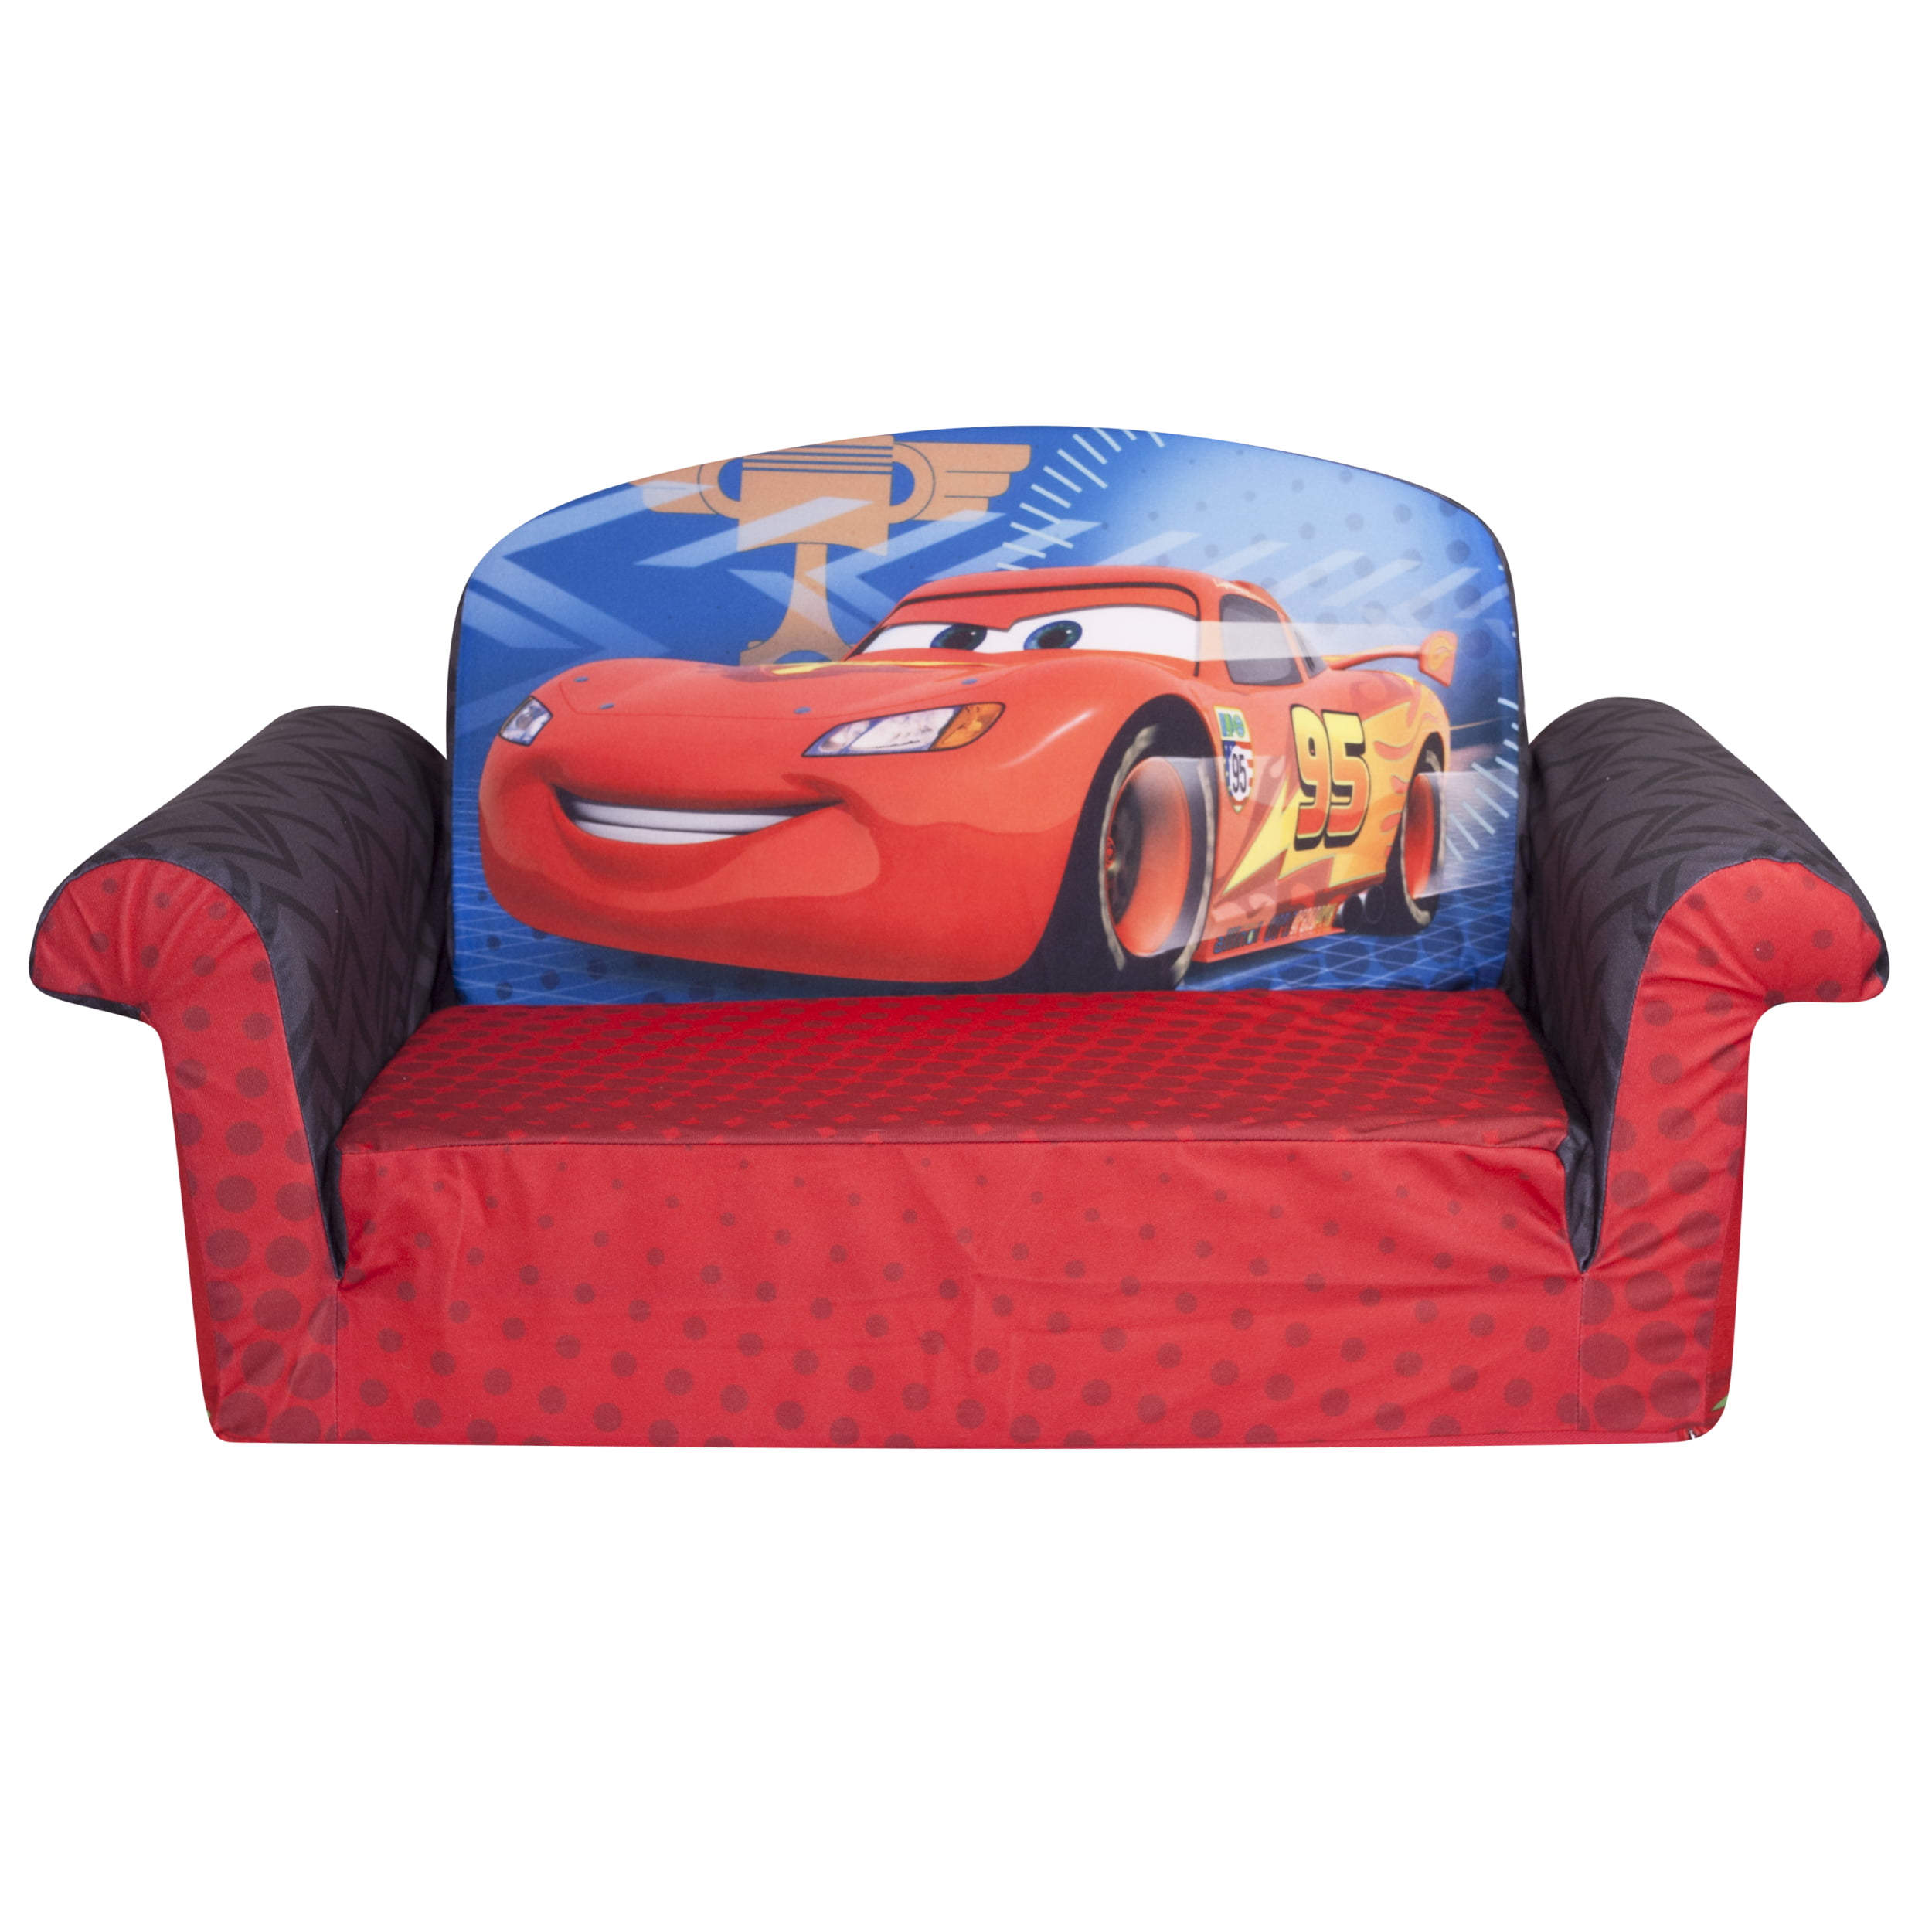 children's couch bed